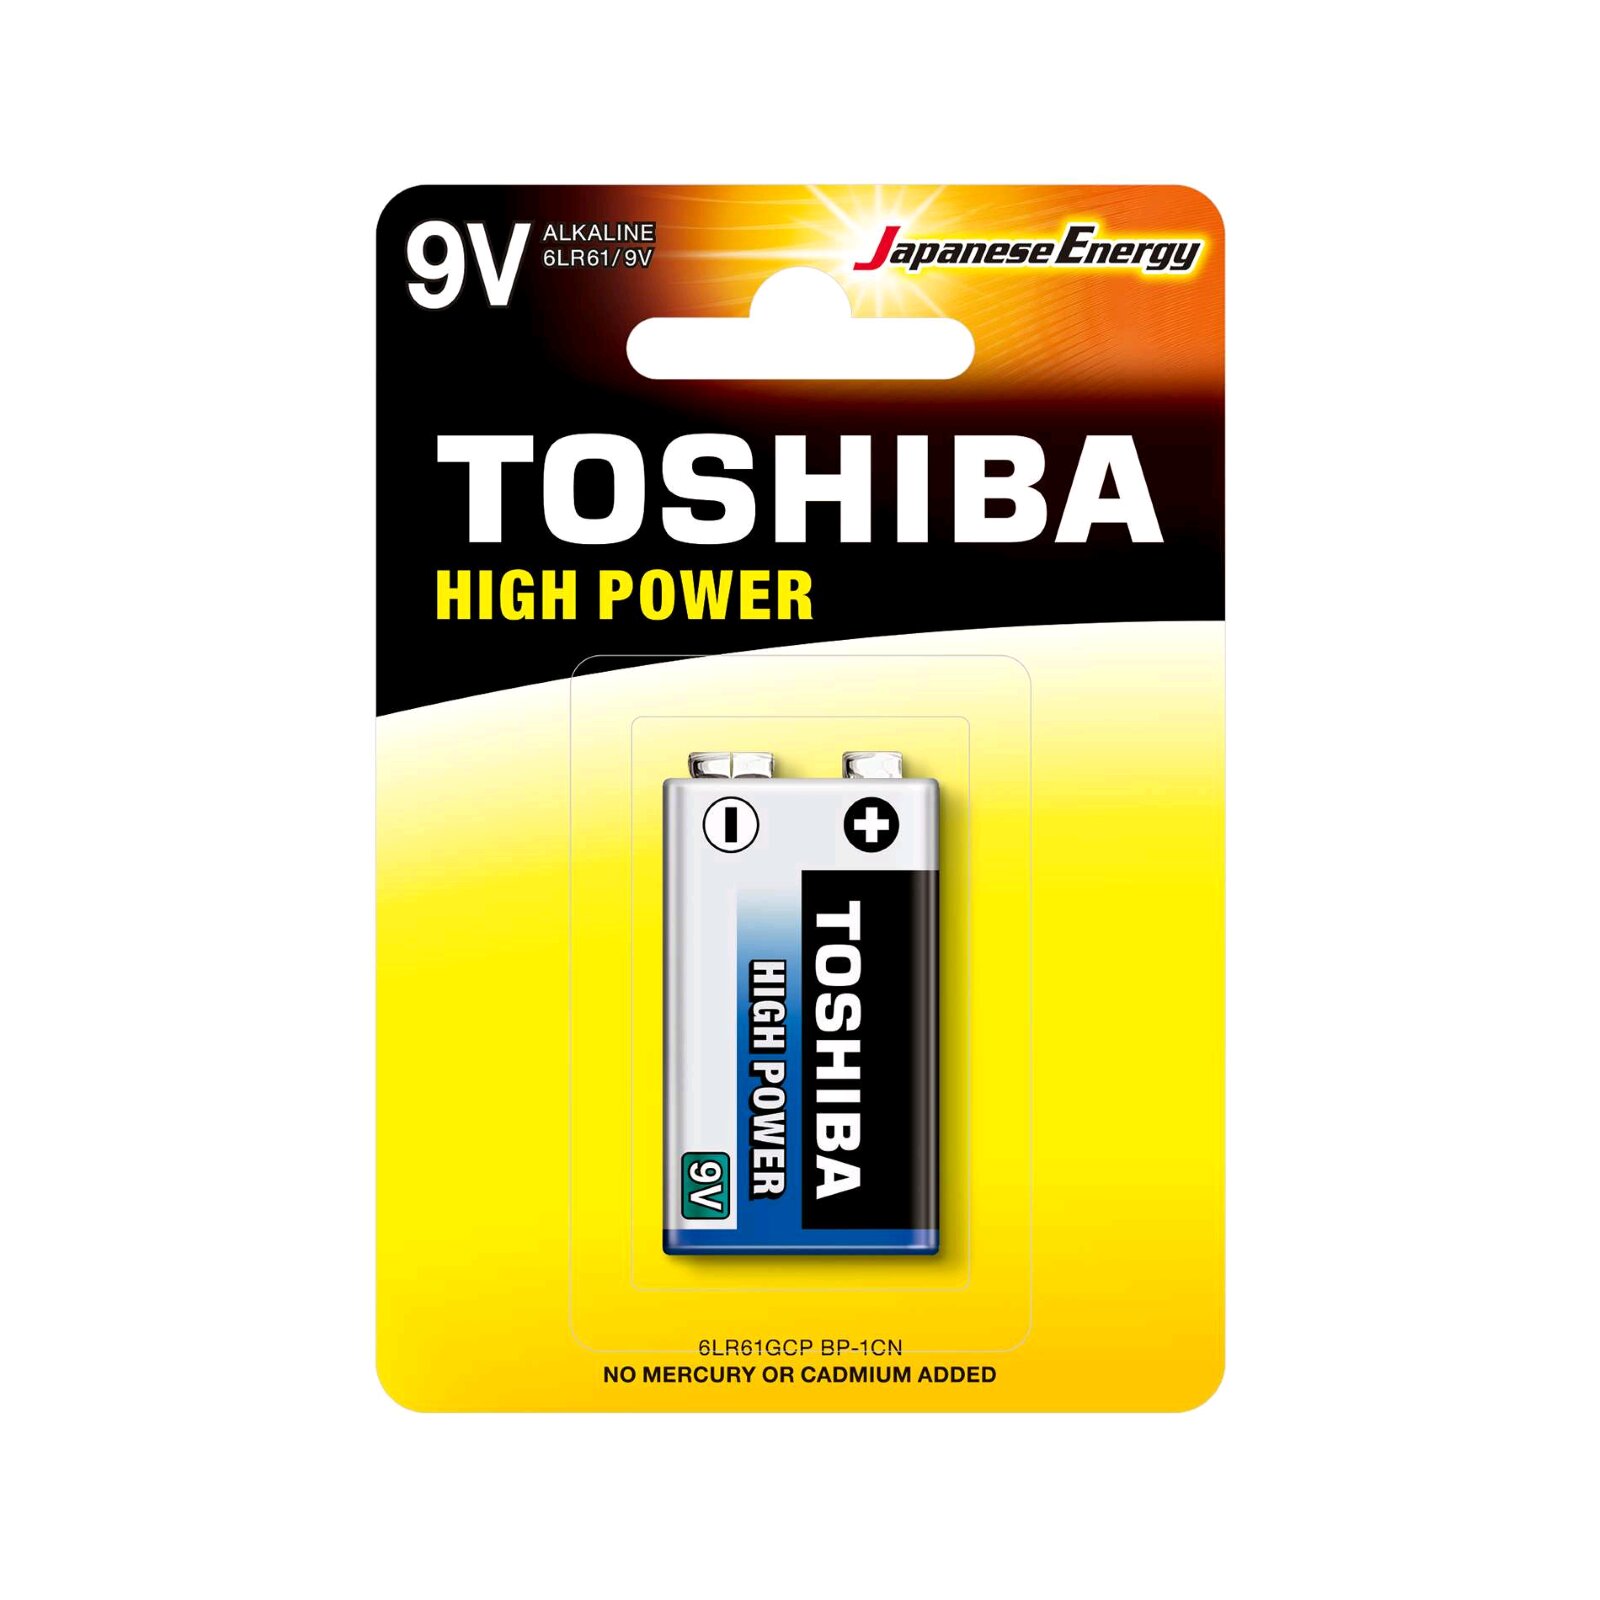 Toshiba High Power 9V - 6LR61GCP BP-1 CN Batterie 6LR61 - Packung mit 1 : photo 1